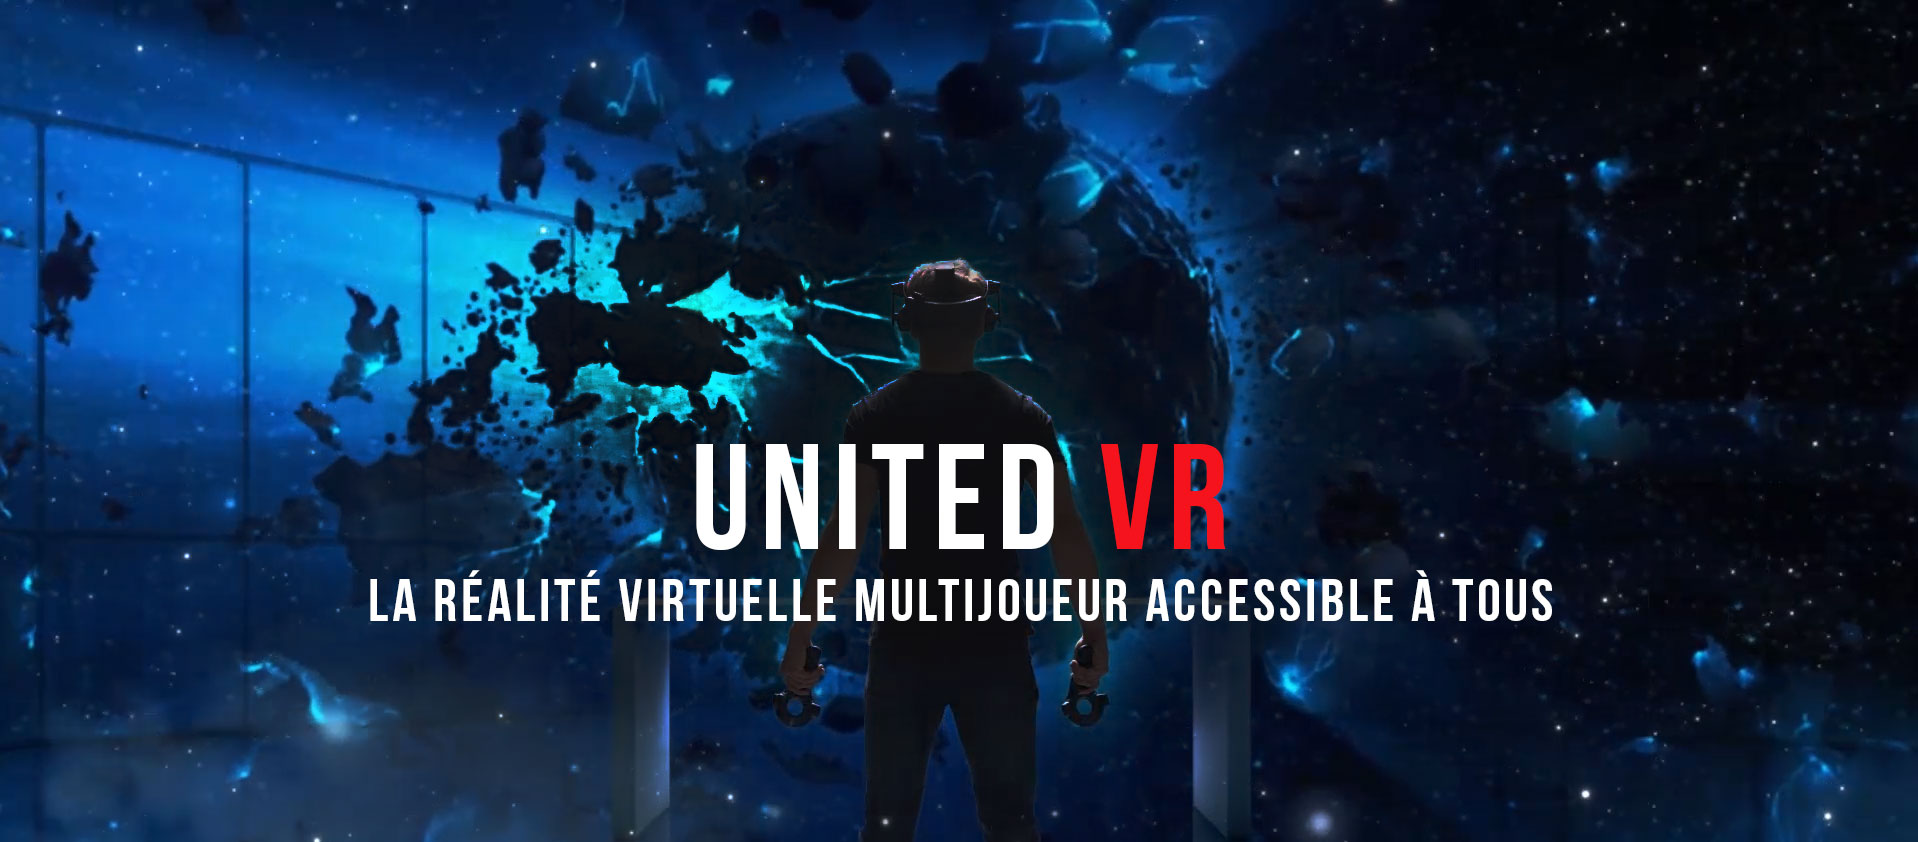 United VR